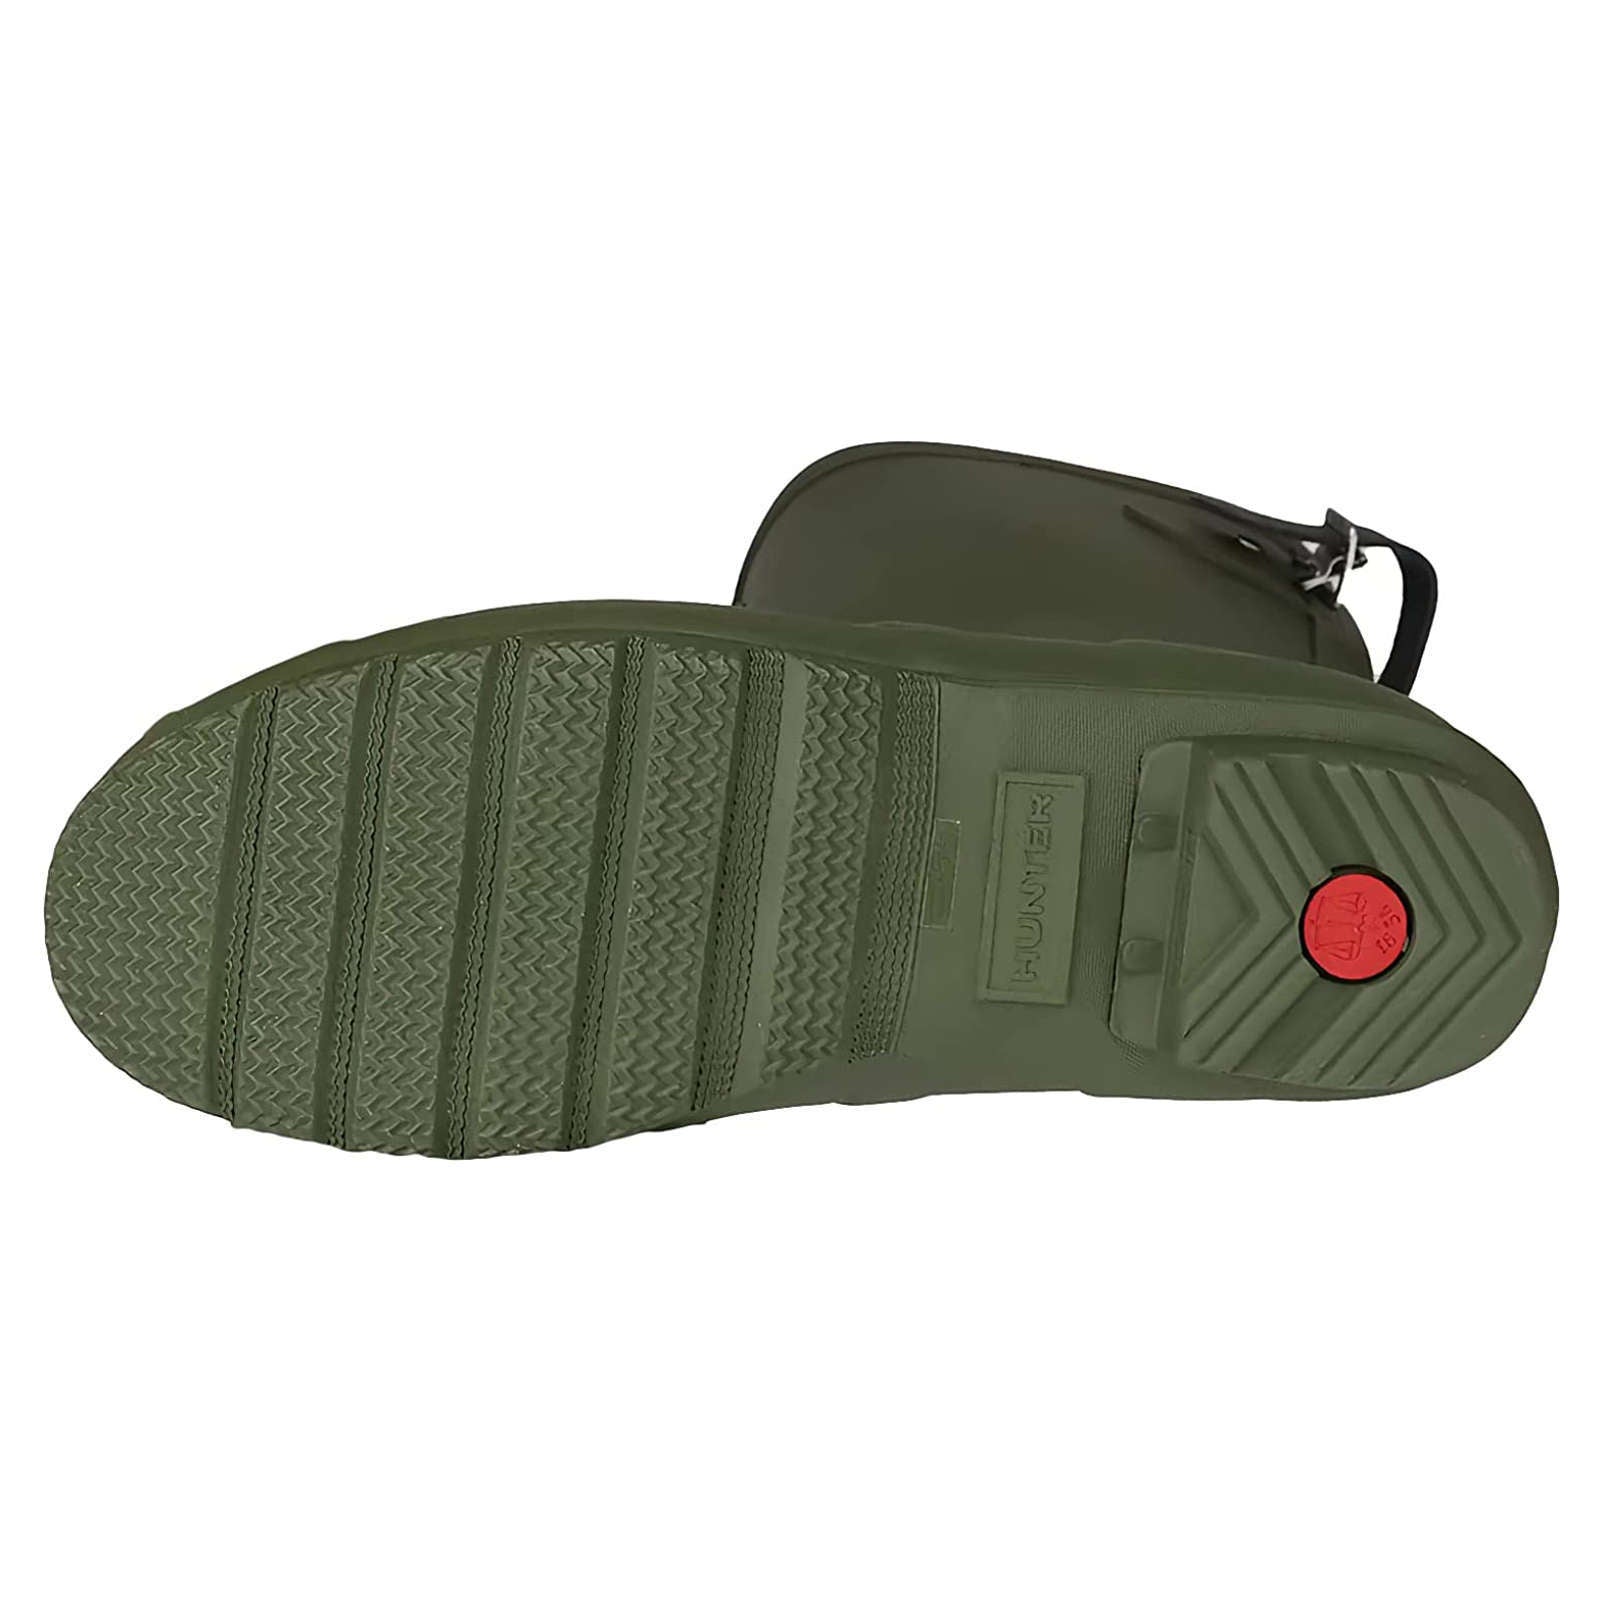 Hunter Original Back Adjustable Short Rubber Women's Short Wellington Boots#color_ismarken olive artic moss